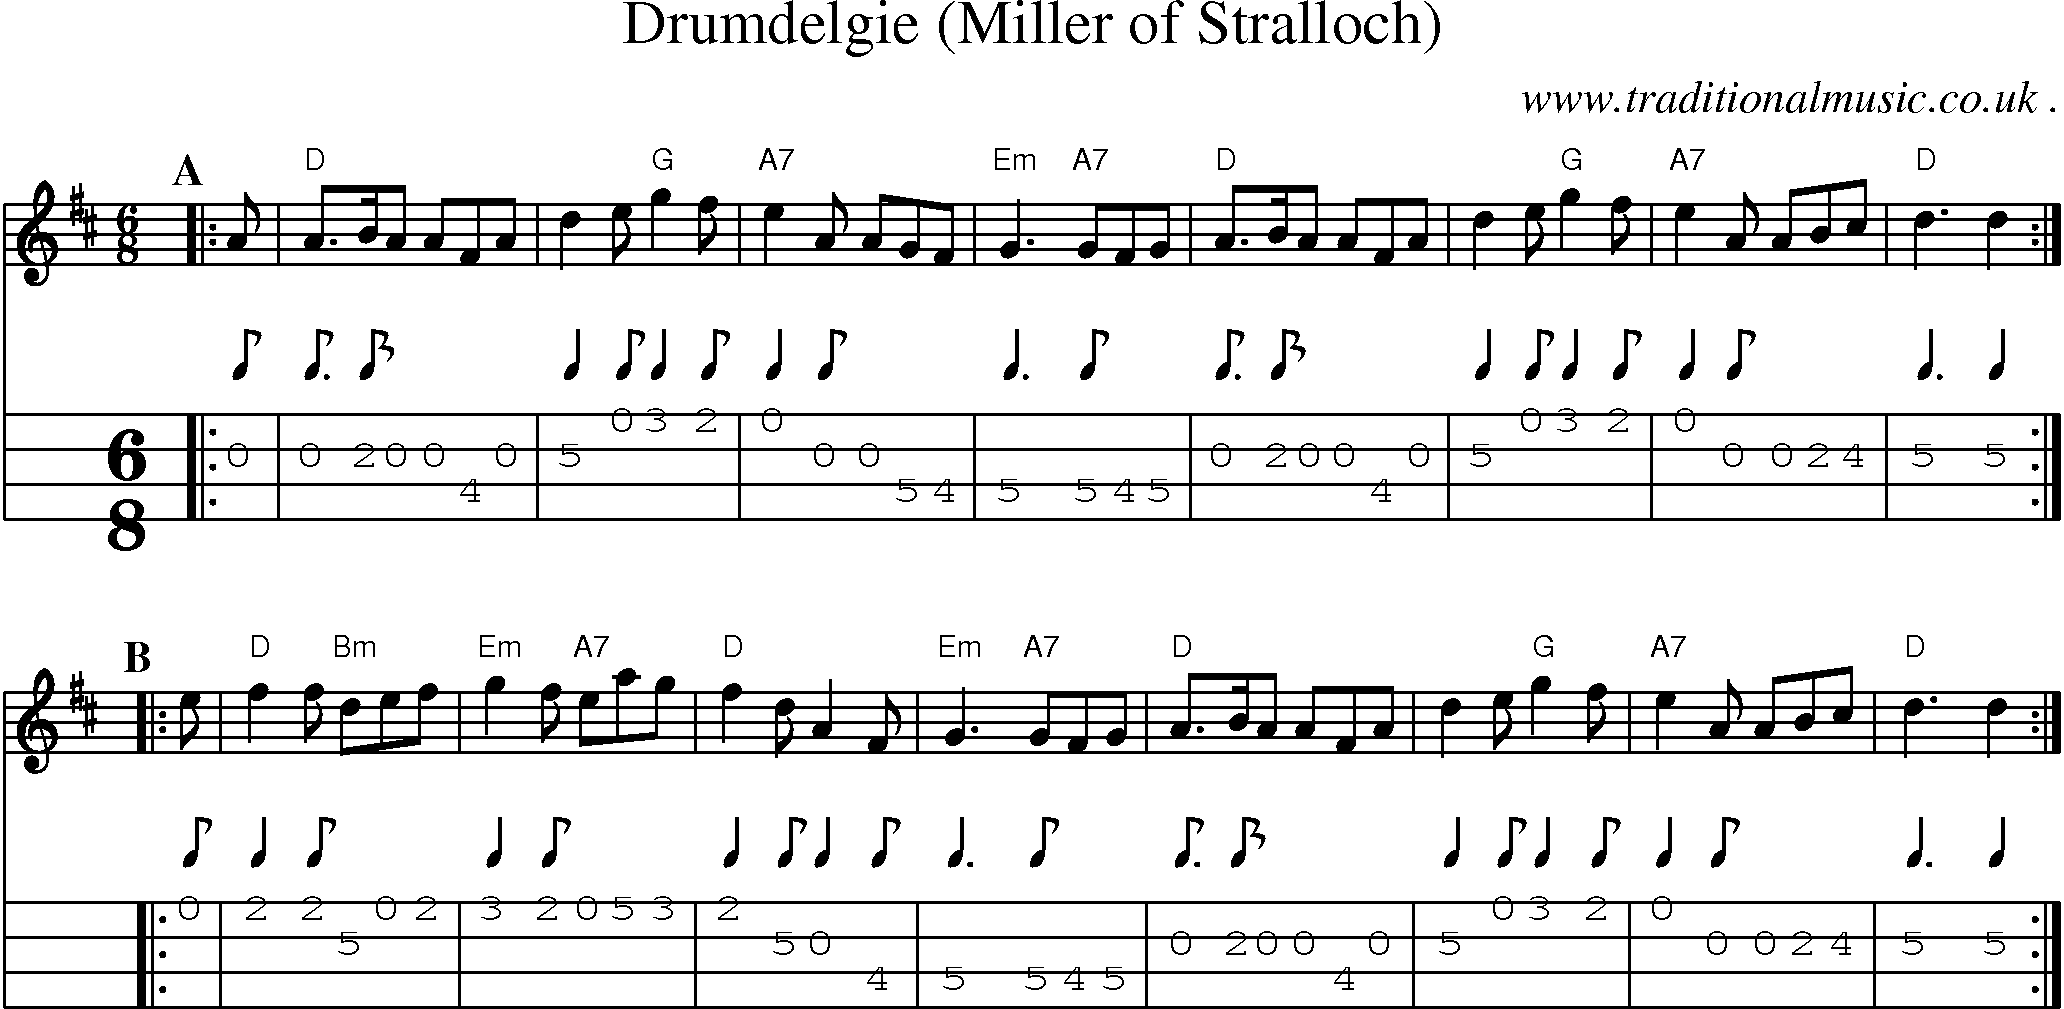 Sheet-music  score, Chords and Mandolin Tabs for Drumdelgie Miller Of Stralloch